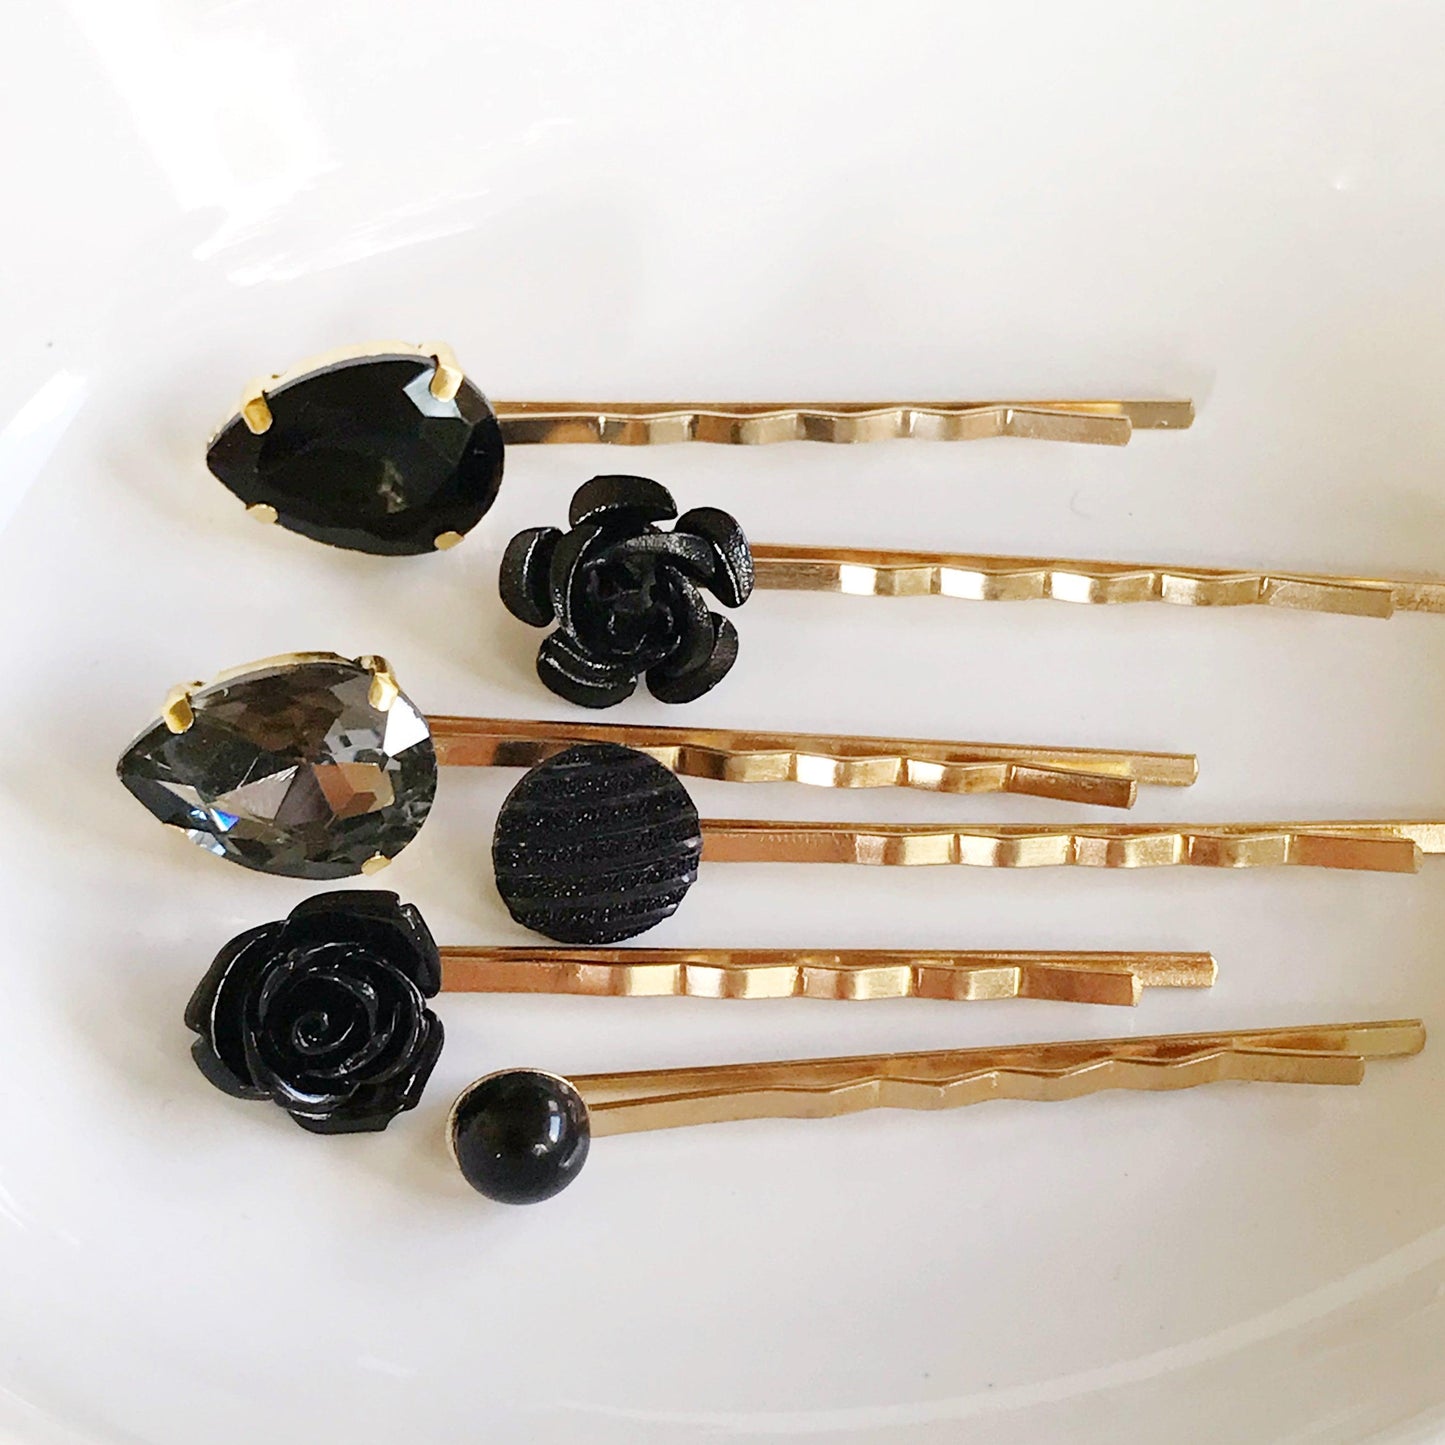 Black & Gold Rhinestone Floral Bobby Pin Set - Elegant Hair Accessories